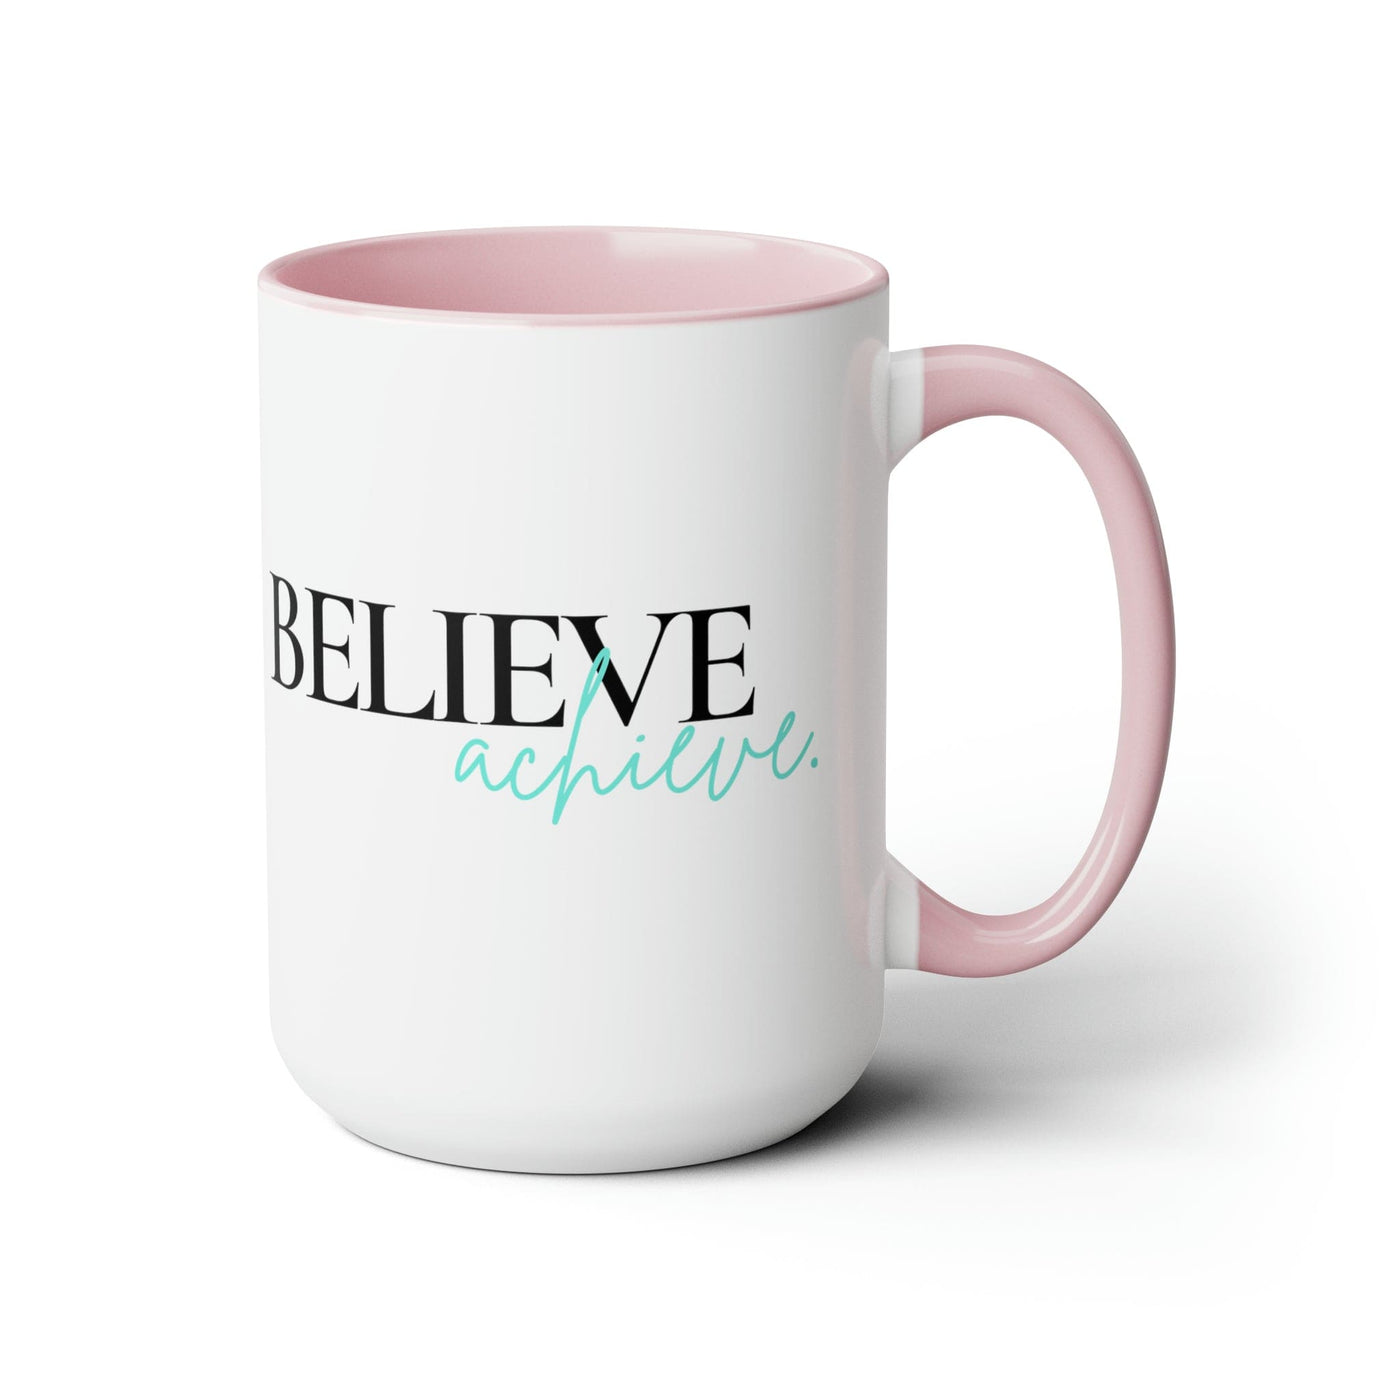 Accent Ceramic Coffee Mug 15oz - Believe And Achieve - Inspirational Motivation